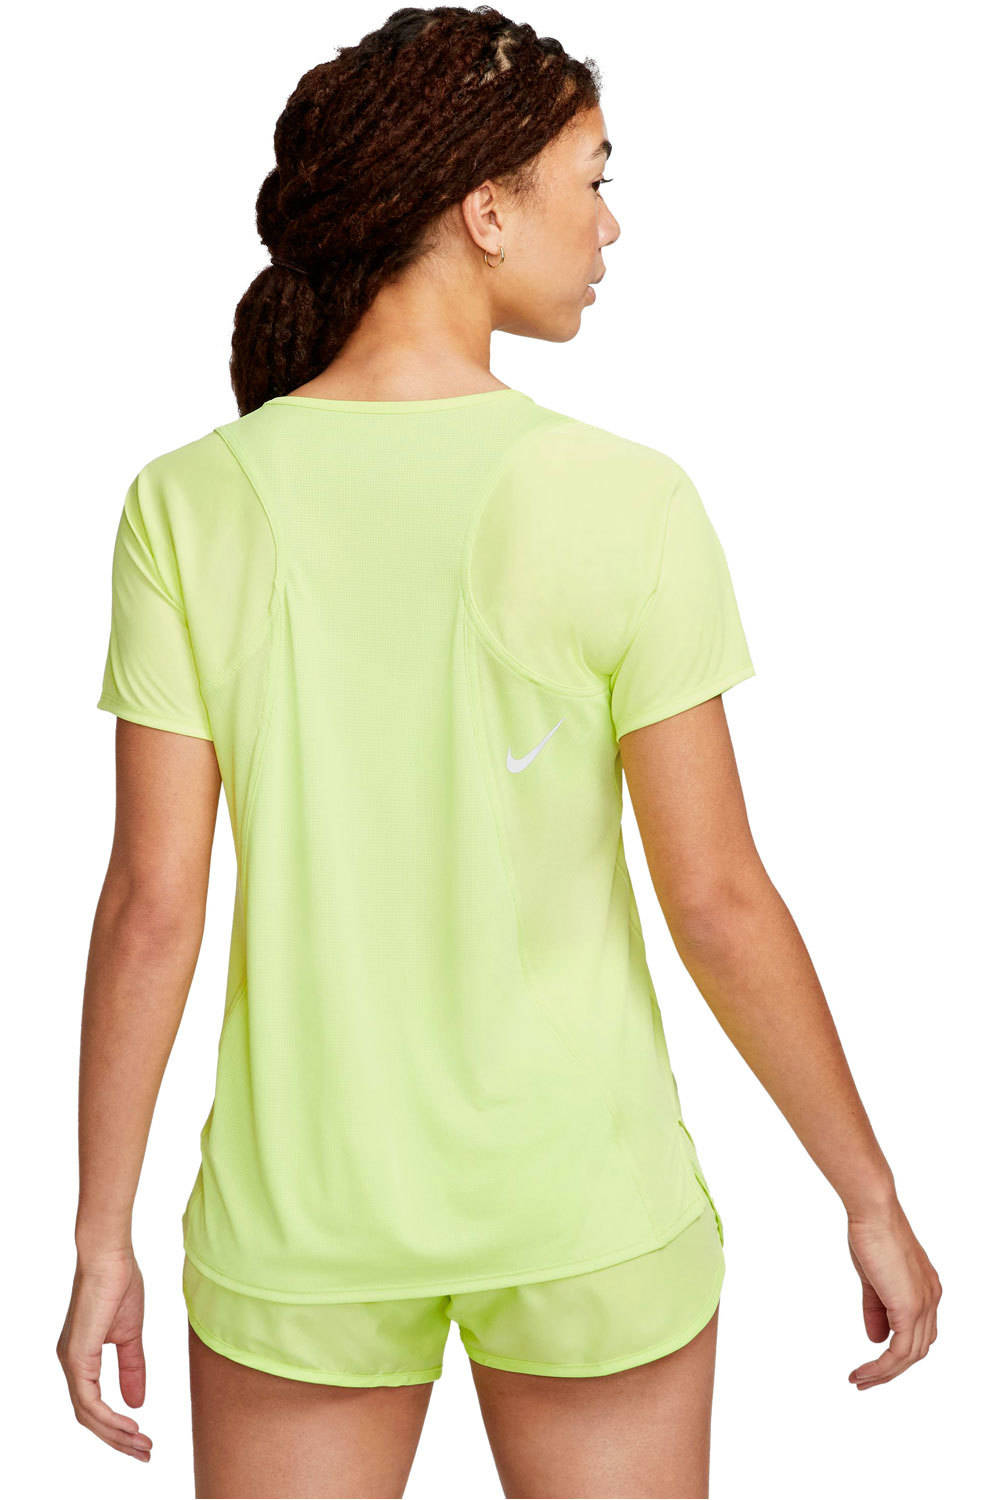 Nike dri-fit race camiseta entrenamiento manga corta mujer